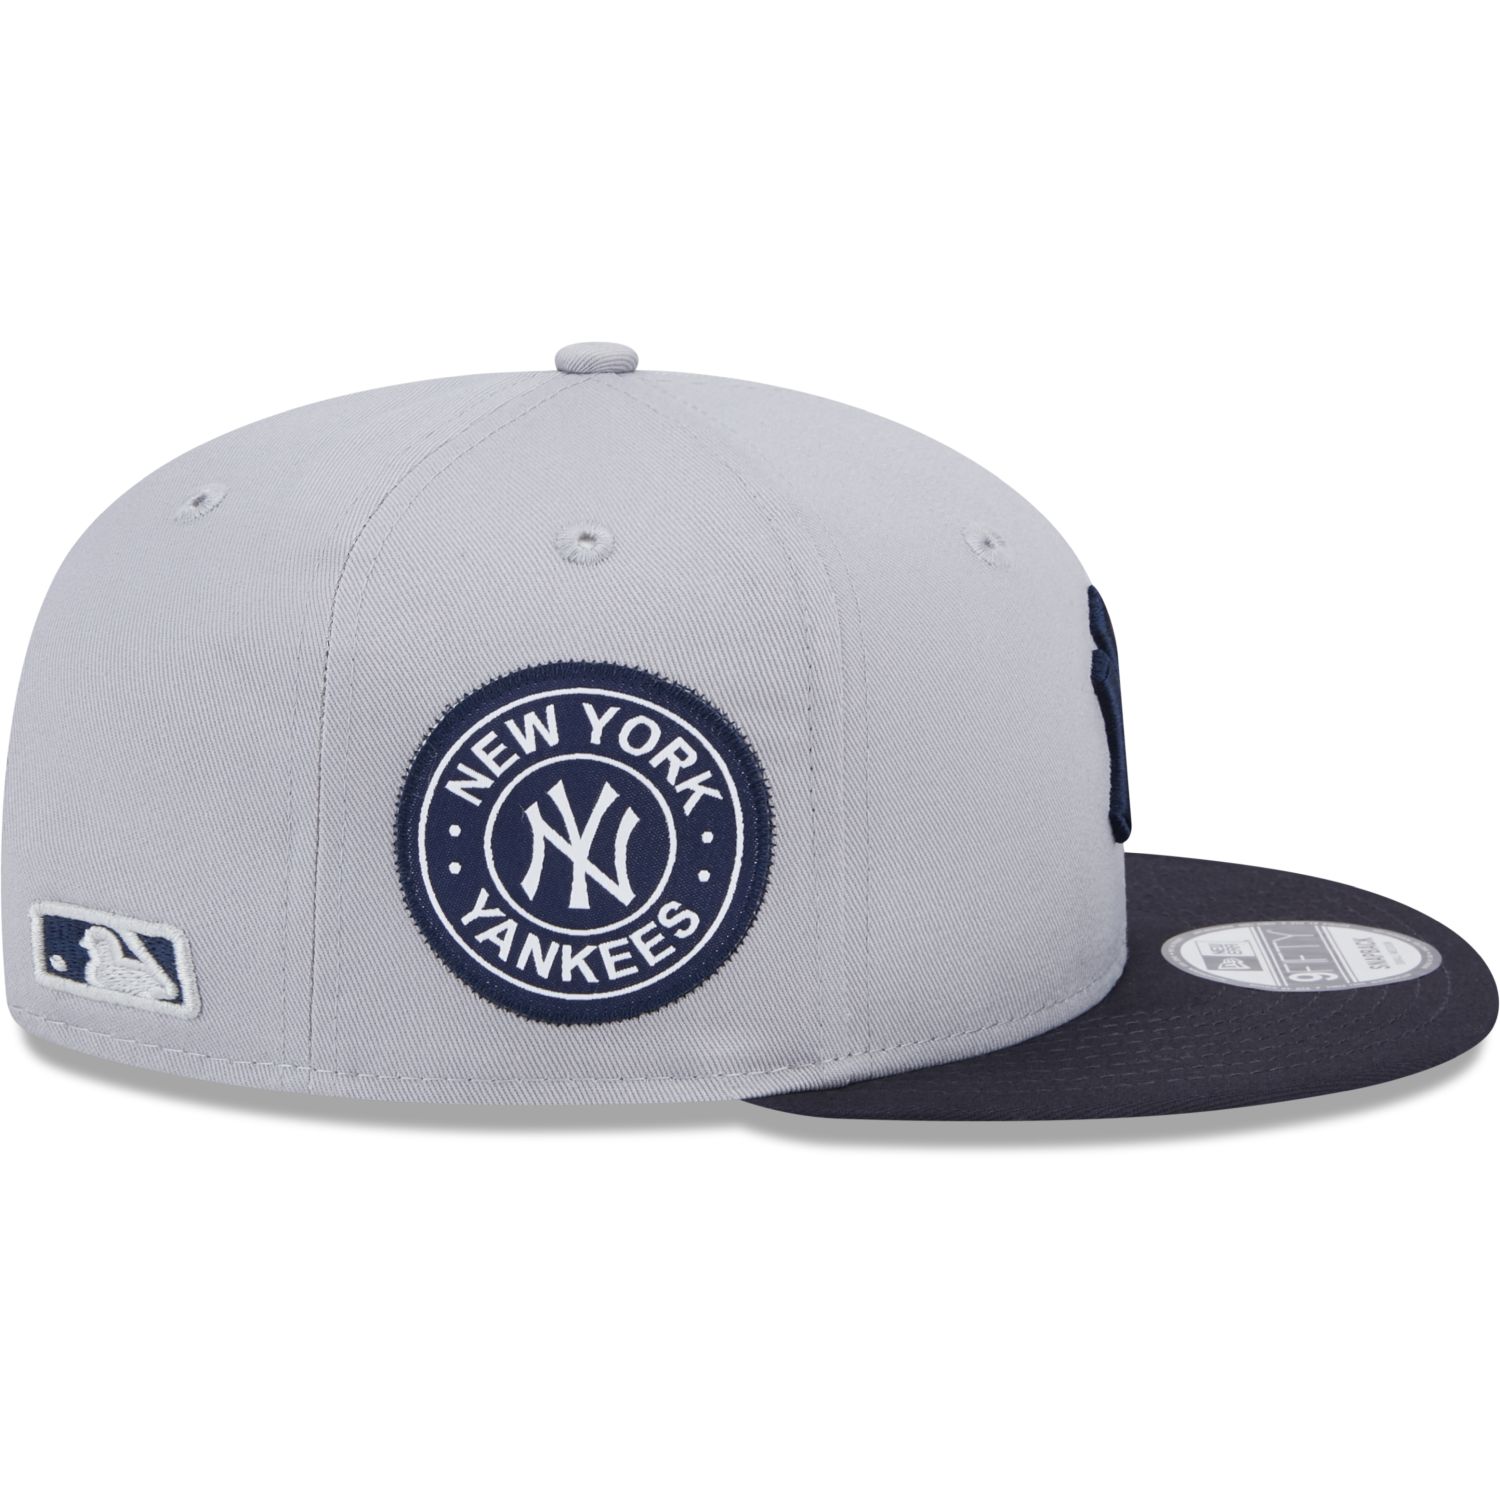 New Era 9Fifty Snapback Cap - SIDEPATCH New York Yankees | Snapback ...